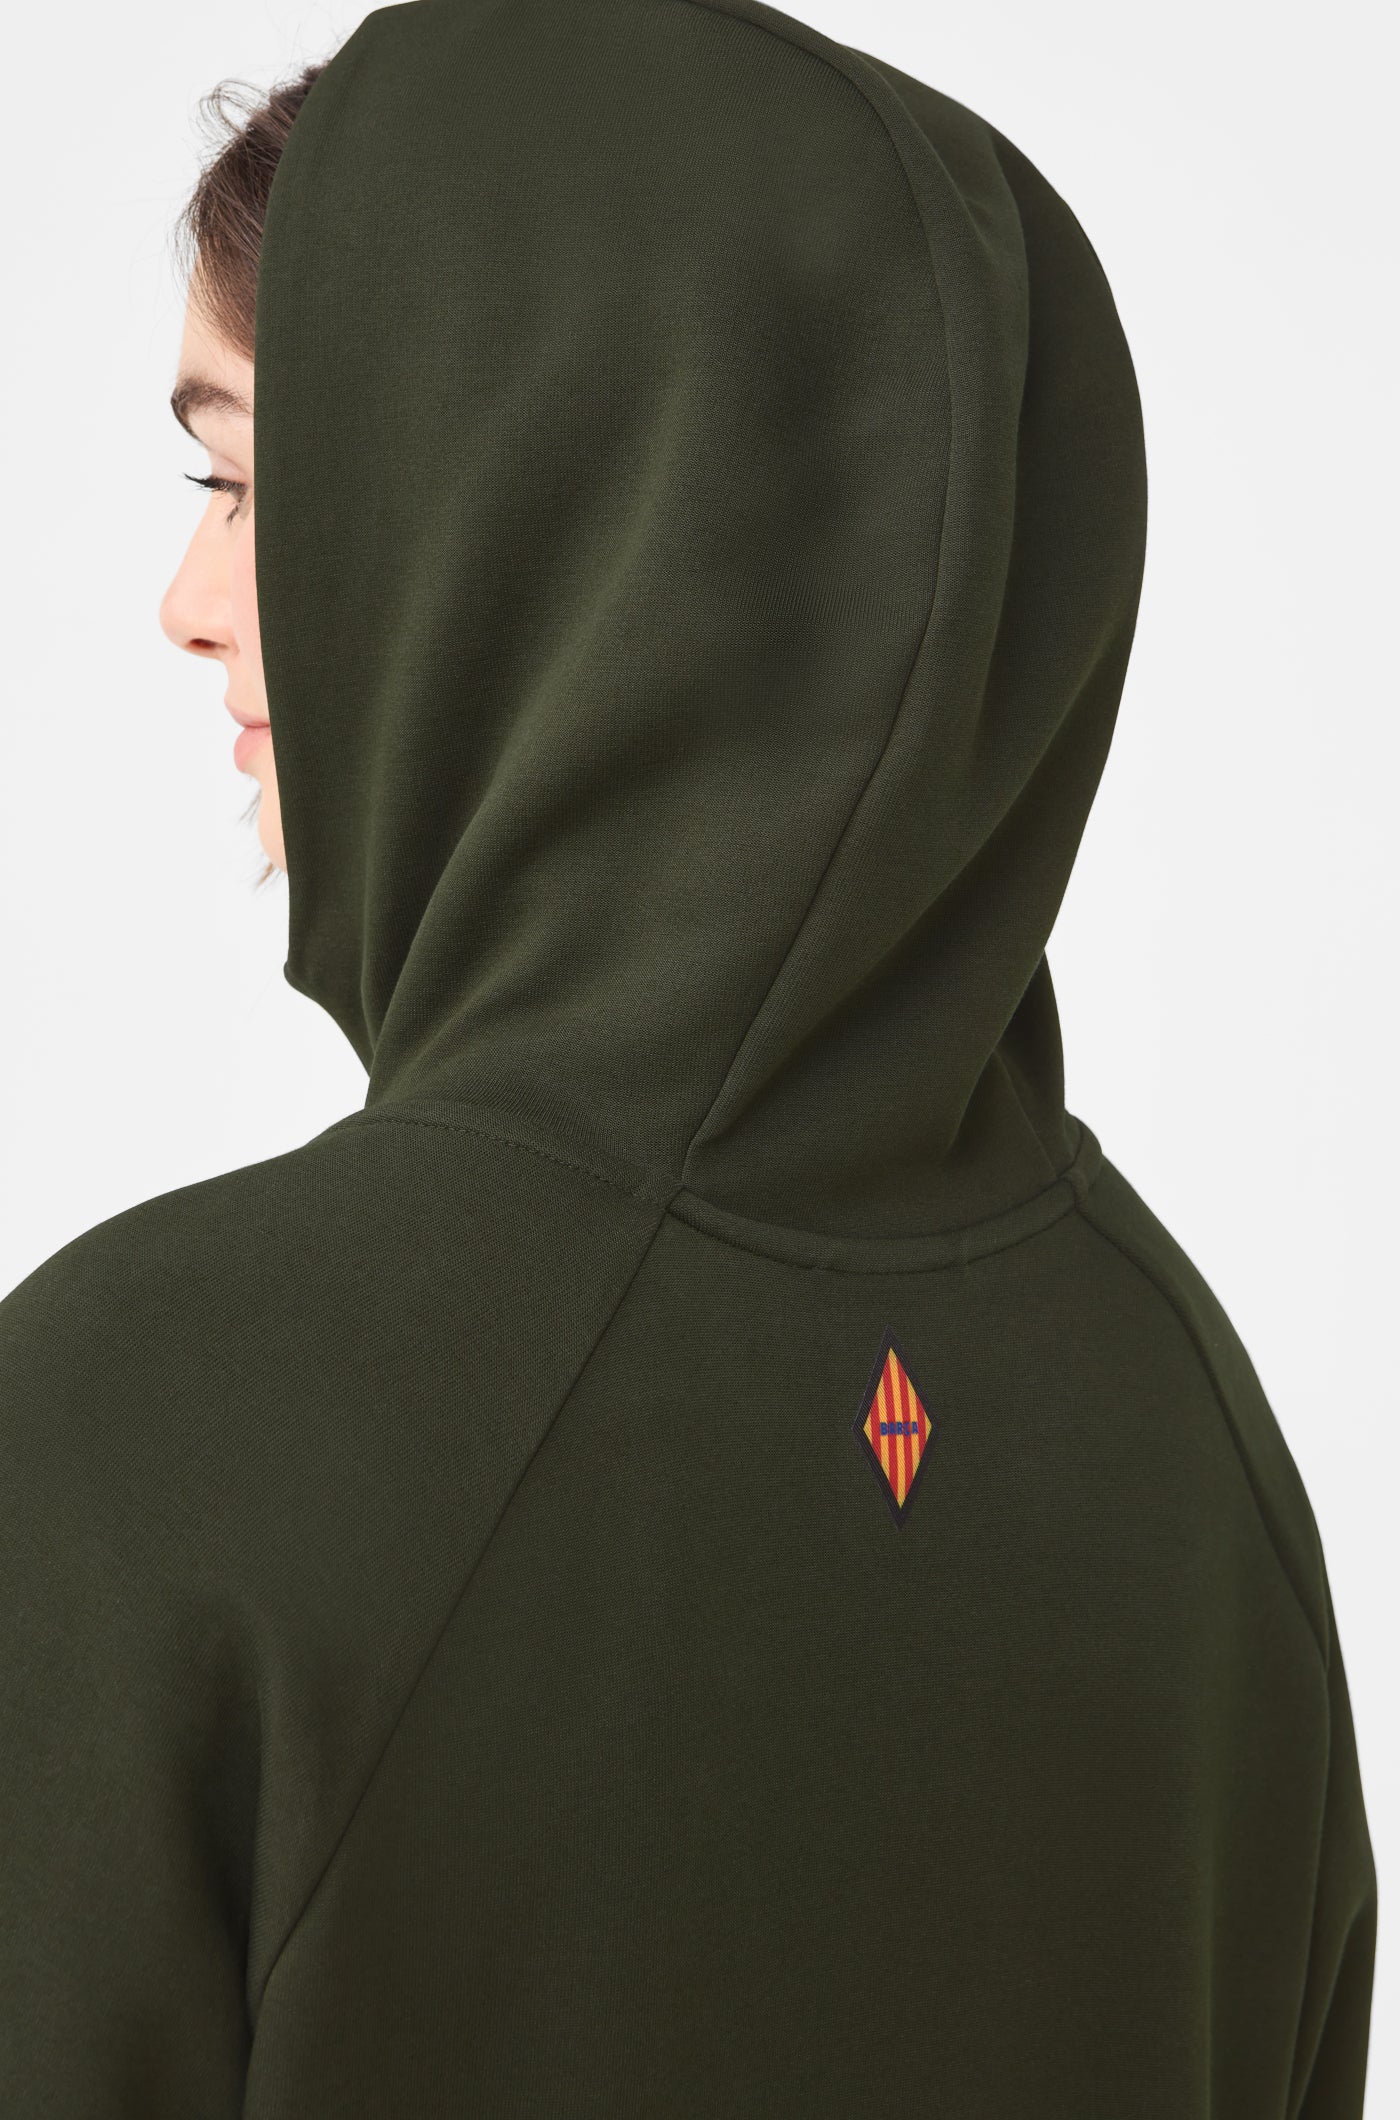 Nike Womens Sports Utility Jacket 1/2 Zip Revolution Pullover Size XS  DX2321 531 | eBay